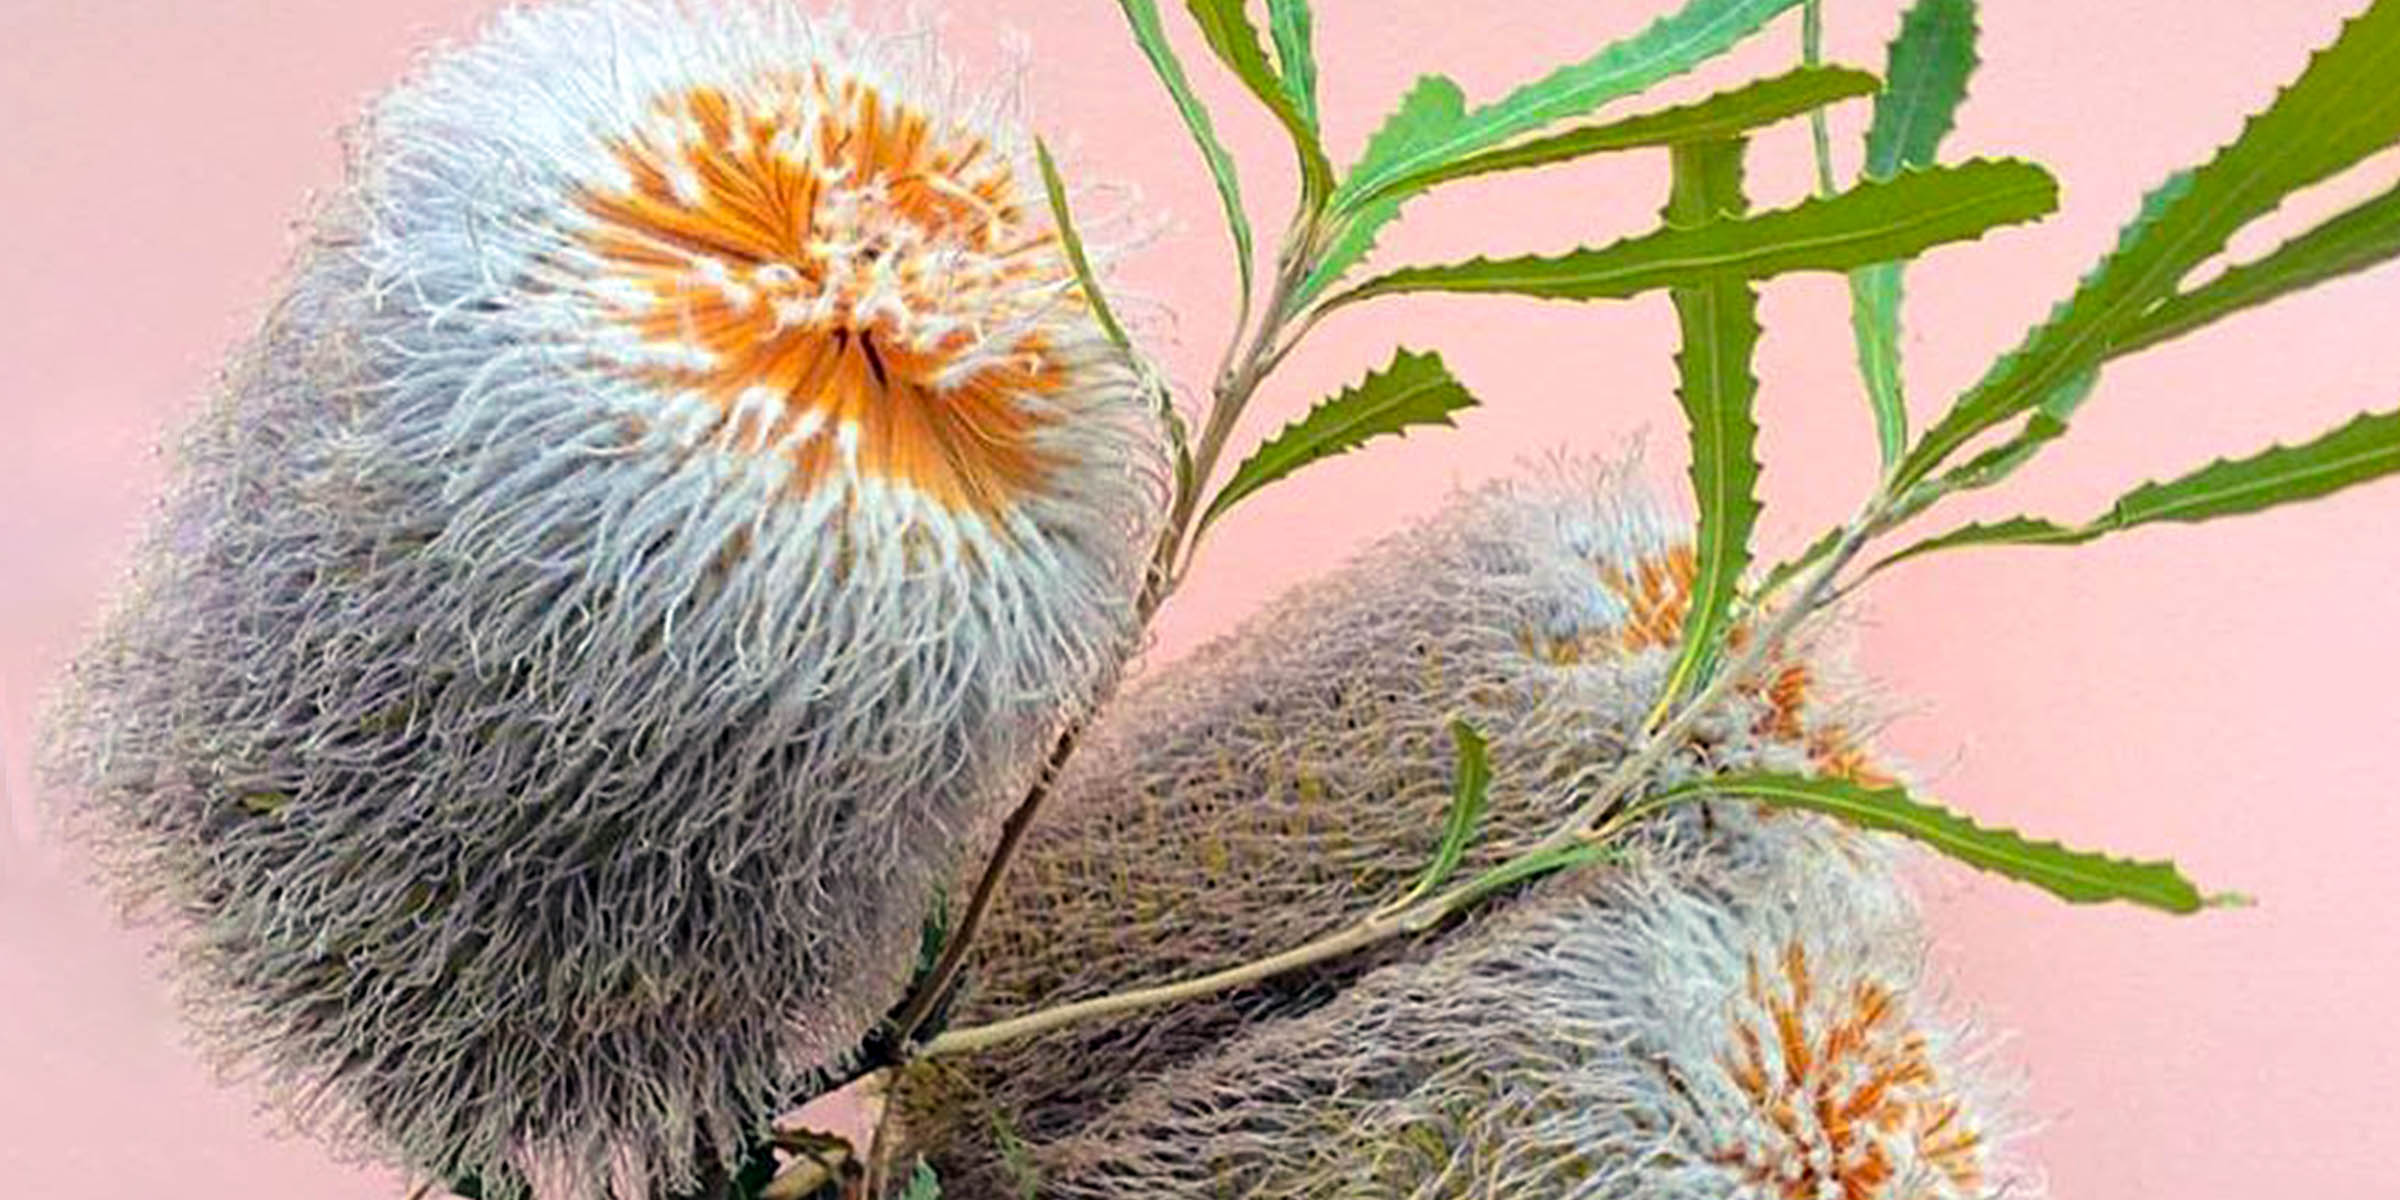 possum-banksia-article-on-thursd-featured